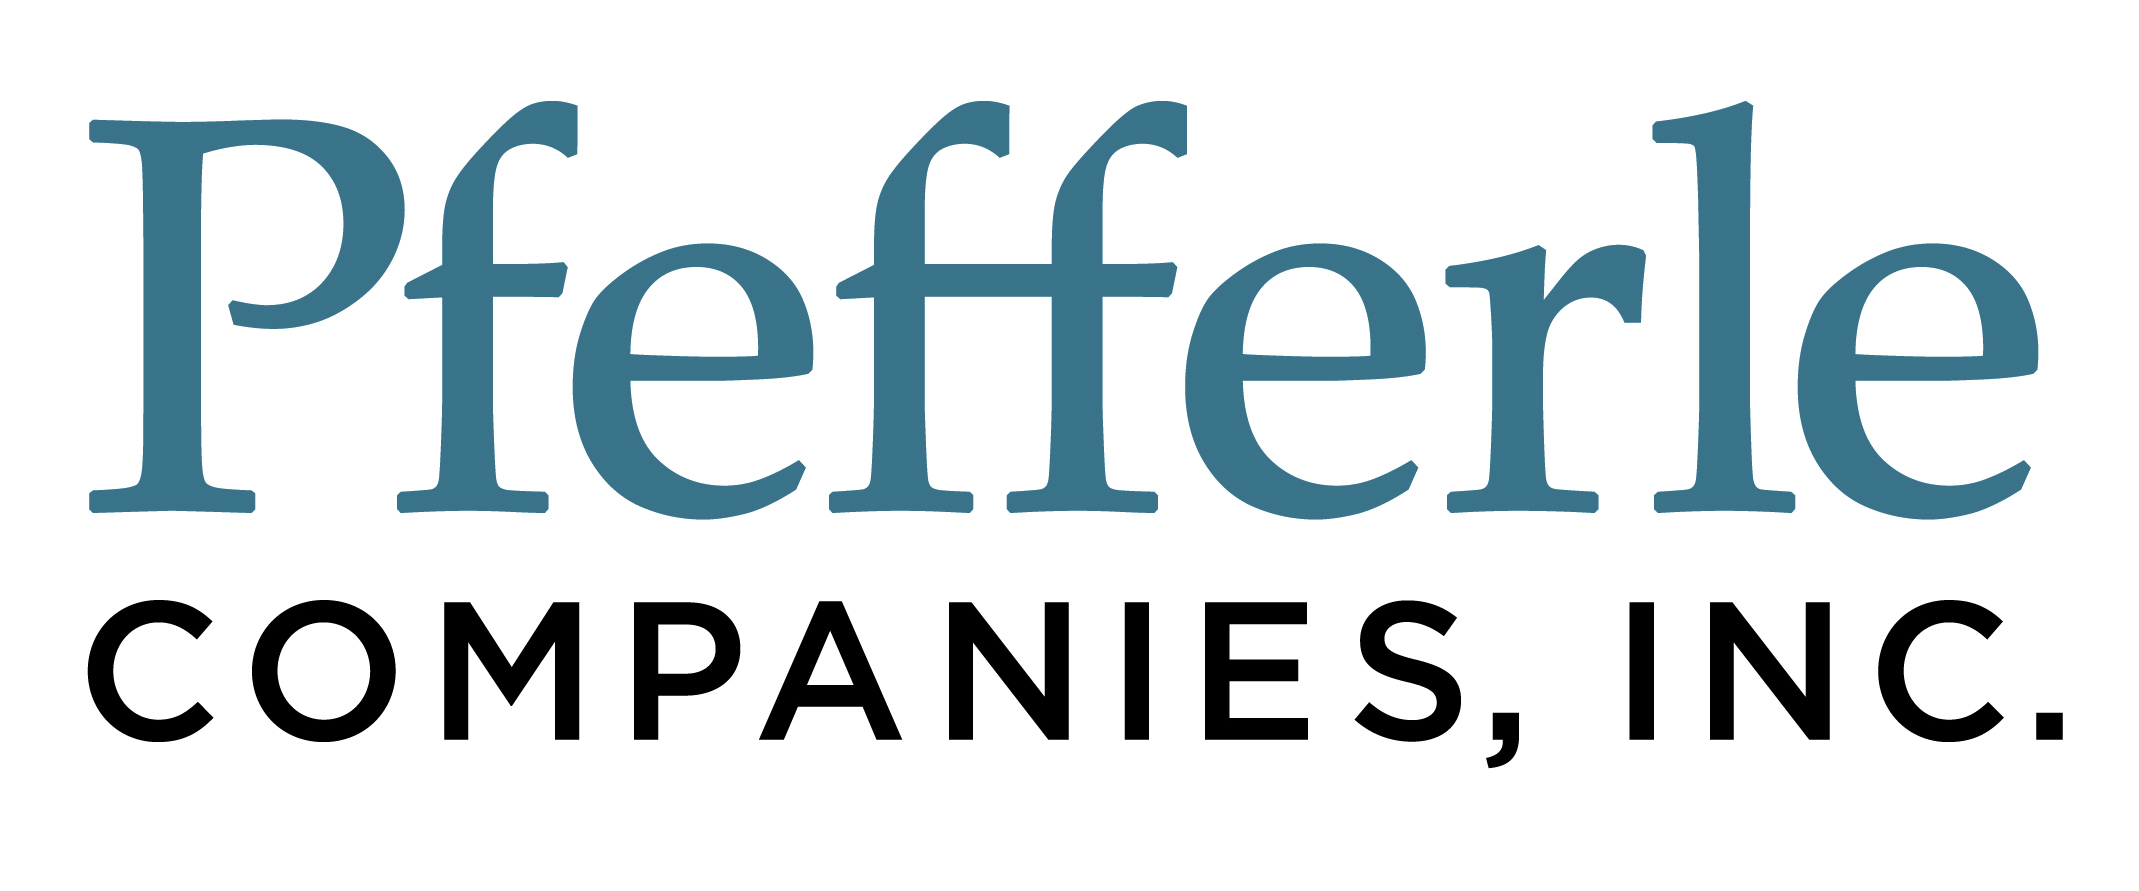 Pfefferle Companies, Inc